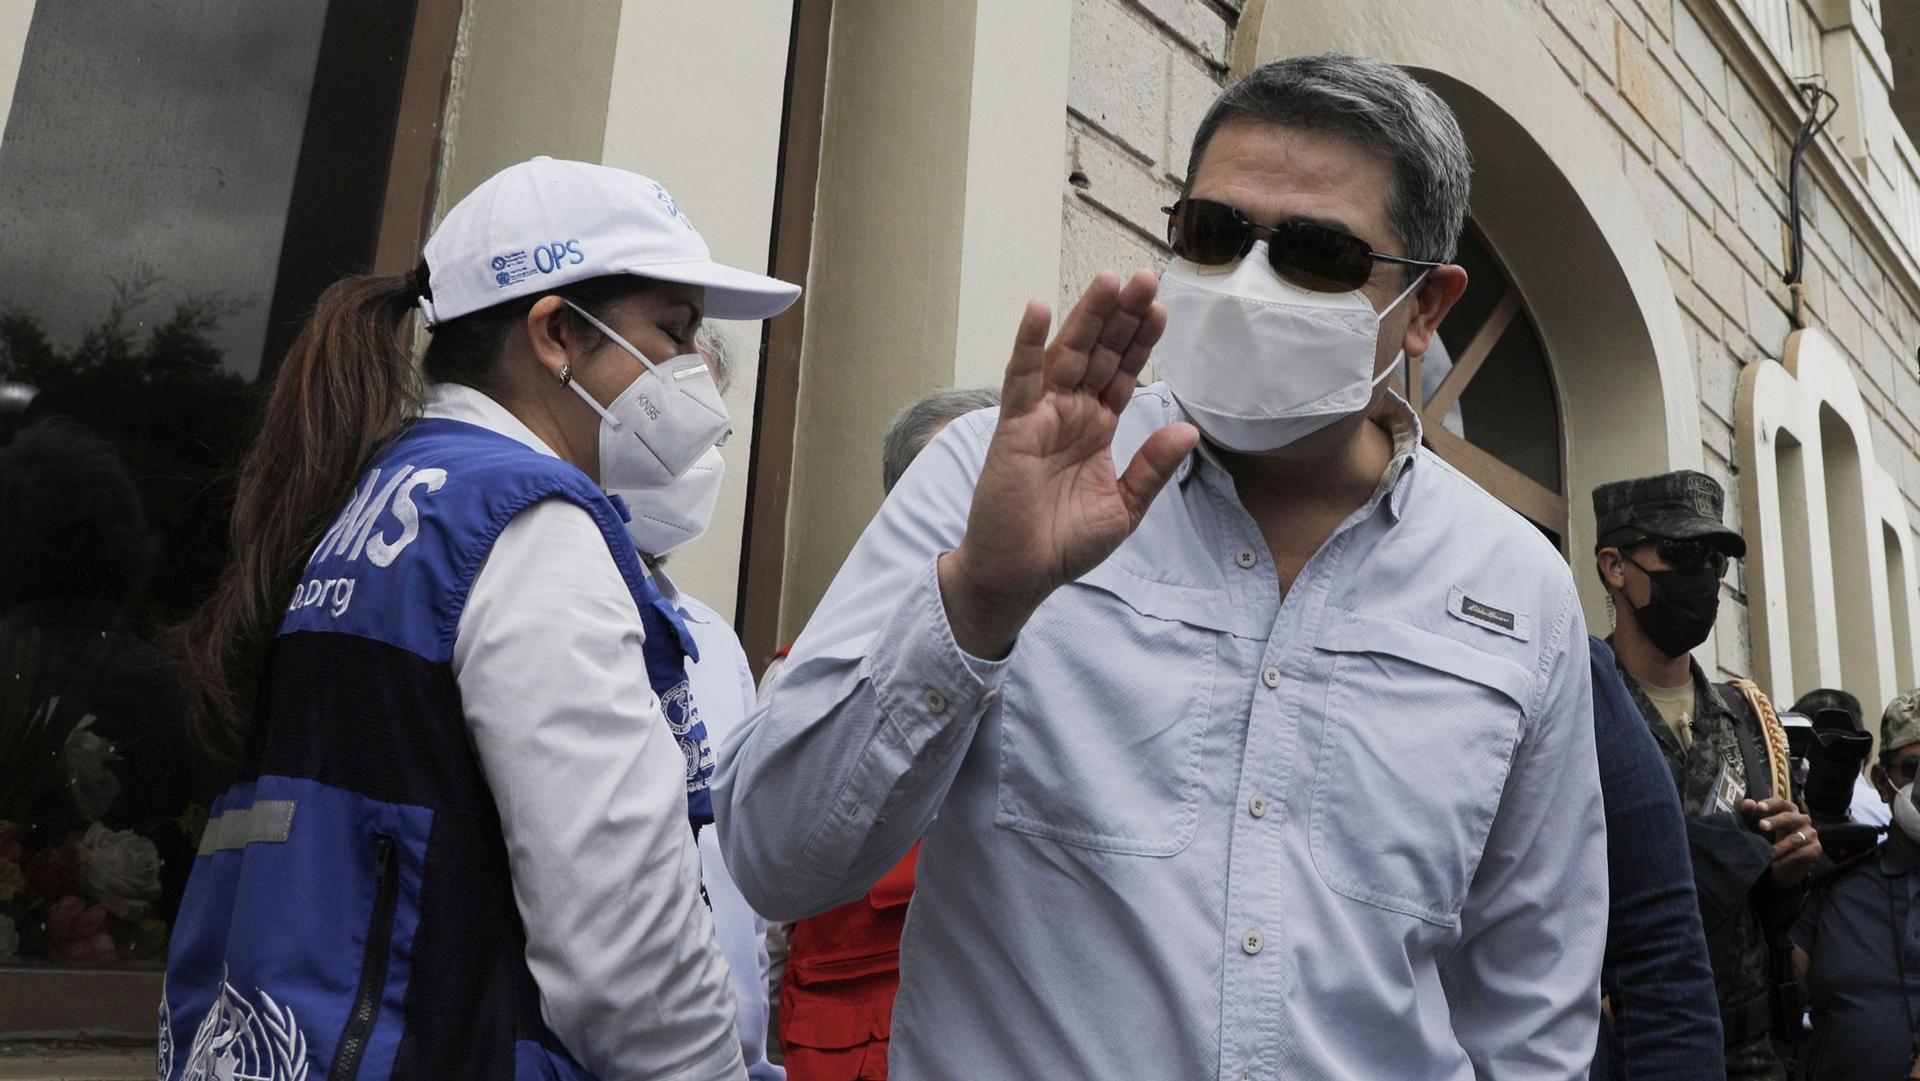 Honduran President Juan Orlando Hernandez is shown wearing a medical mask and sunglasses while waving his right hand.